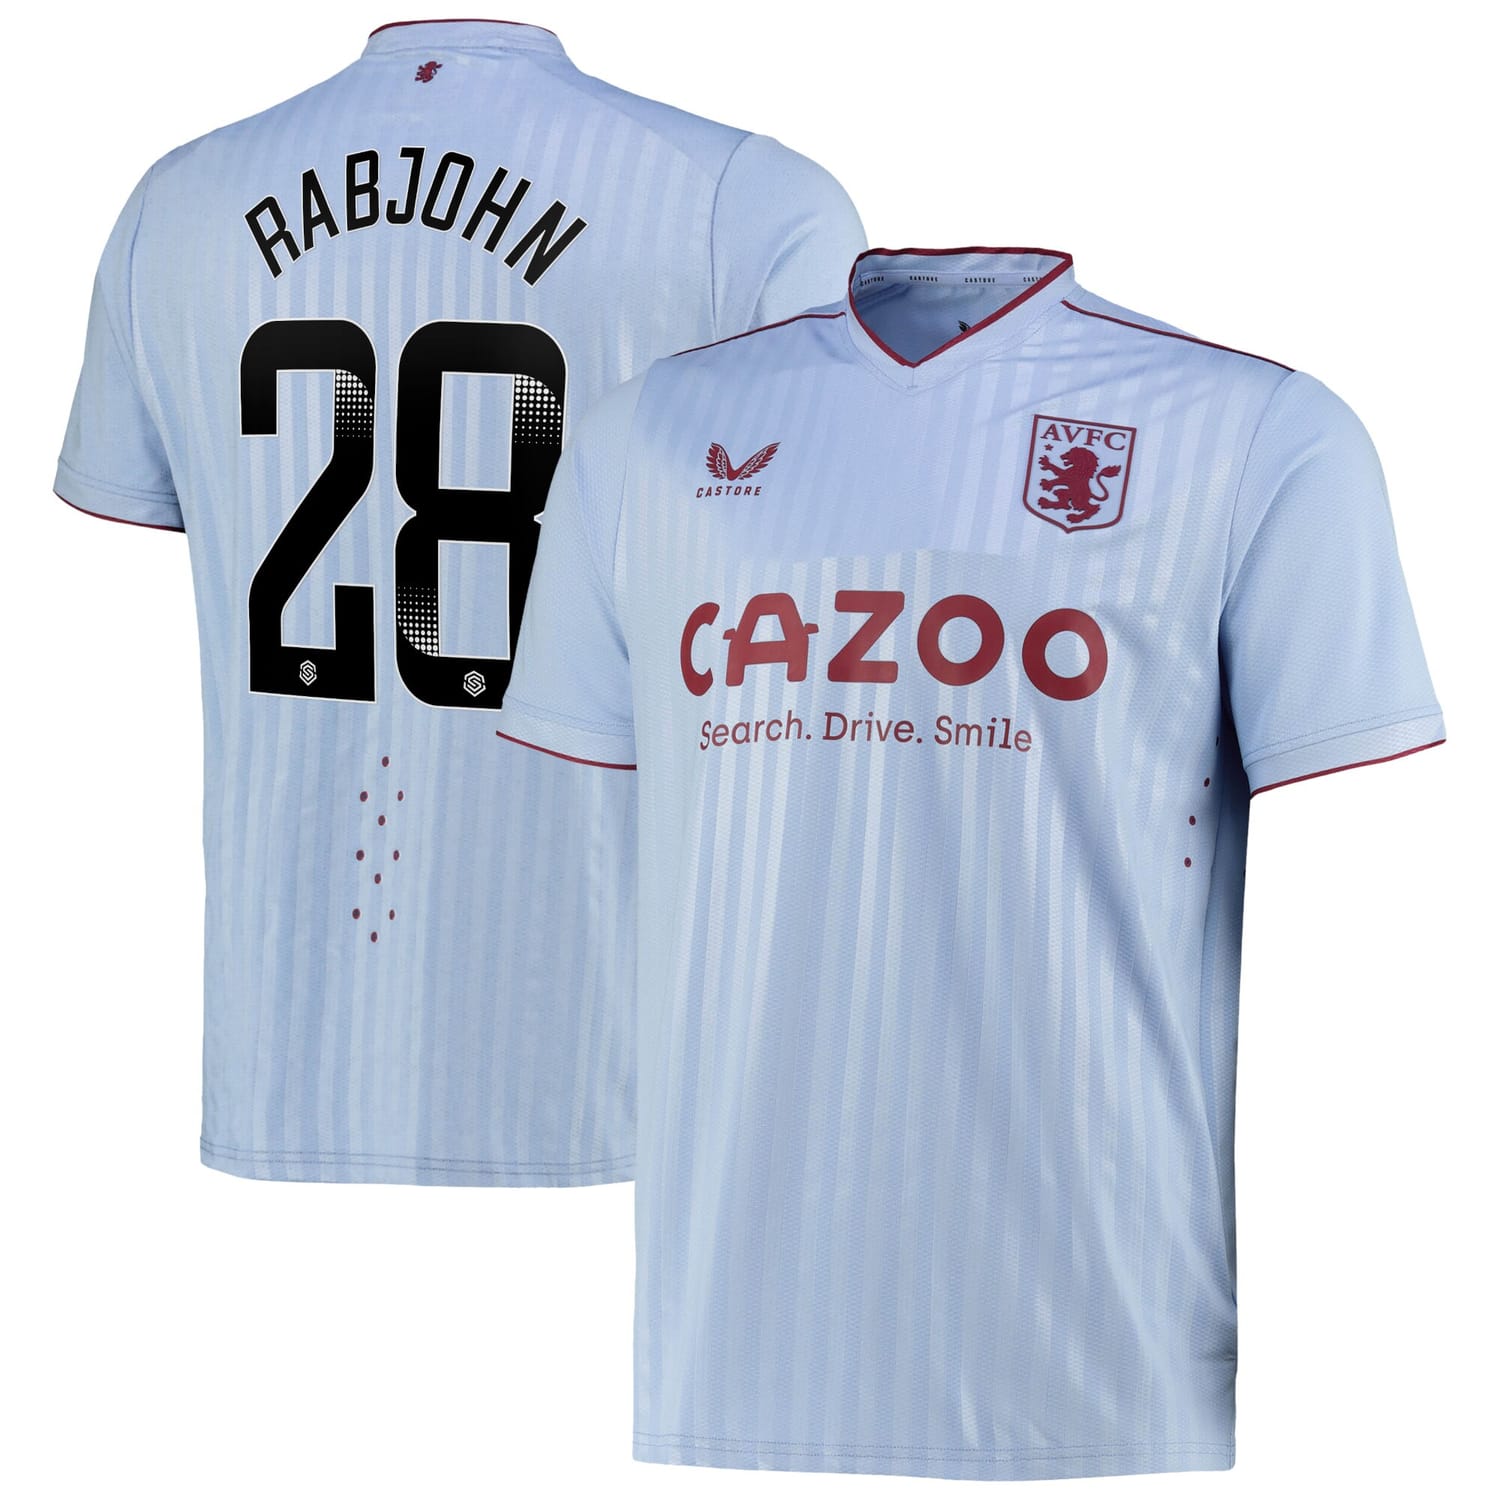 Premier League Aston Villa Away Pro Jersey Shirt 2022-23 player Evie Rabjohn 28 printing for Men